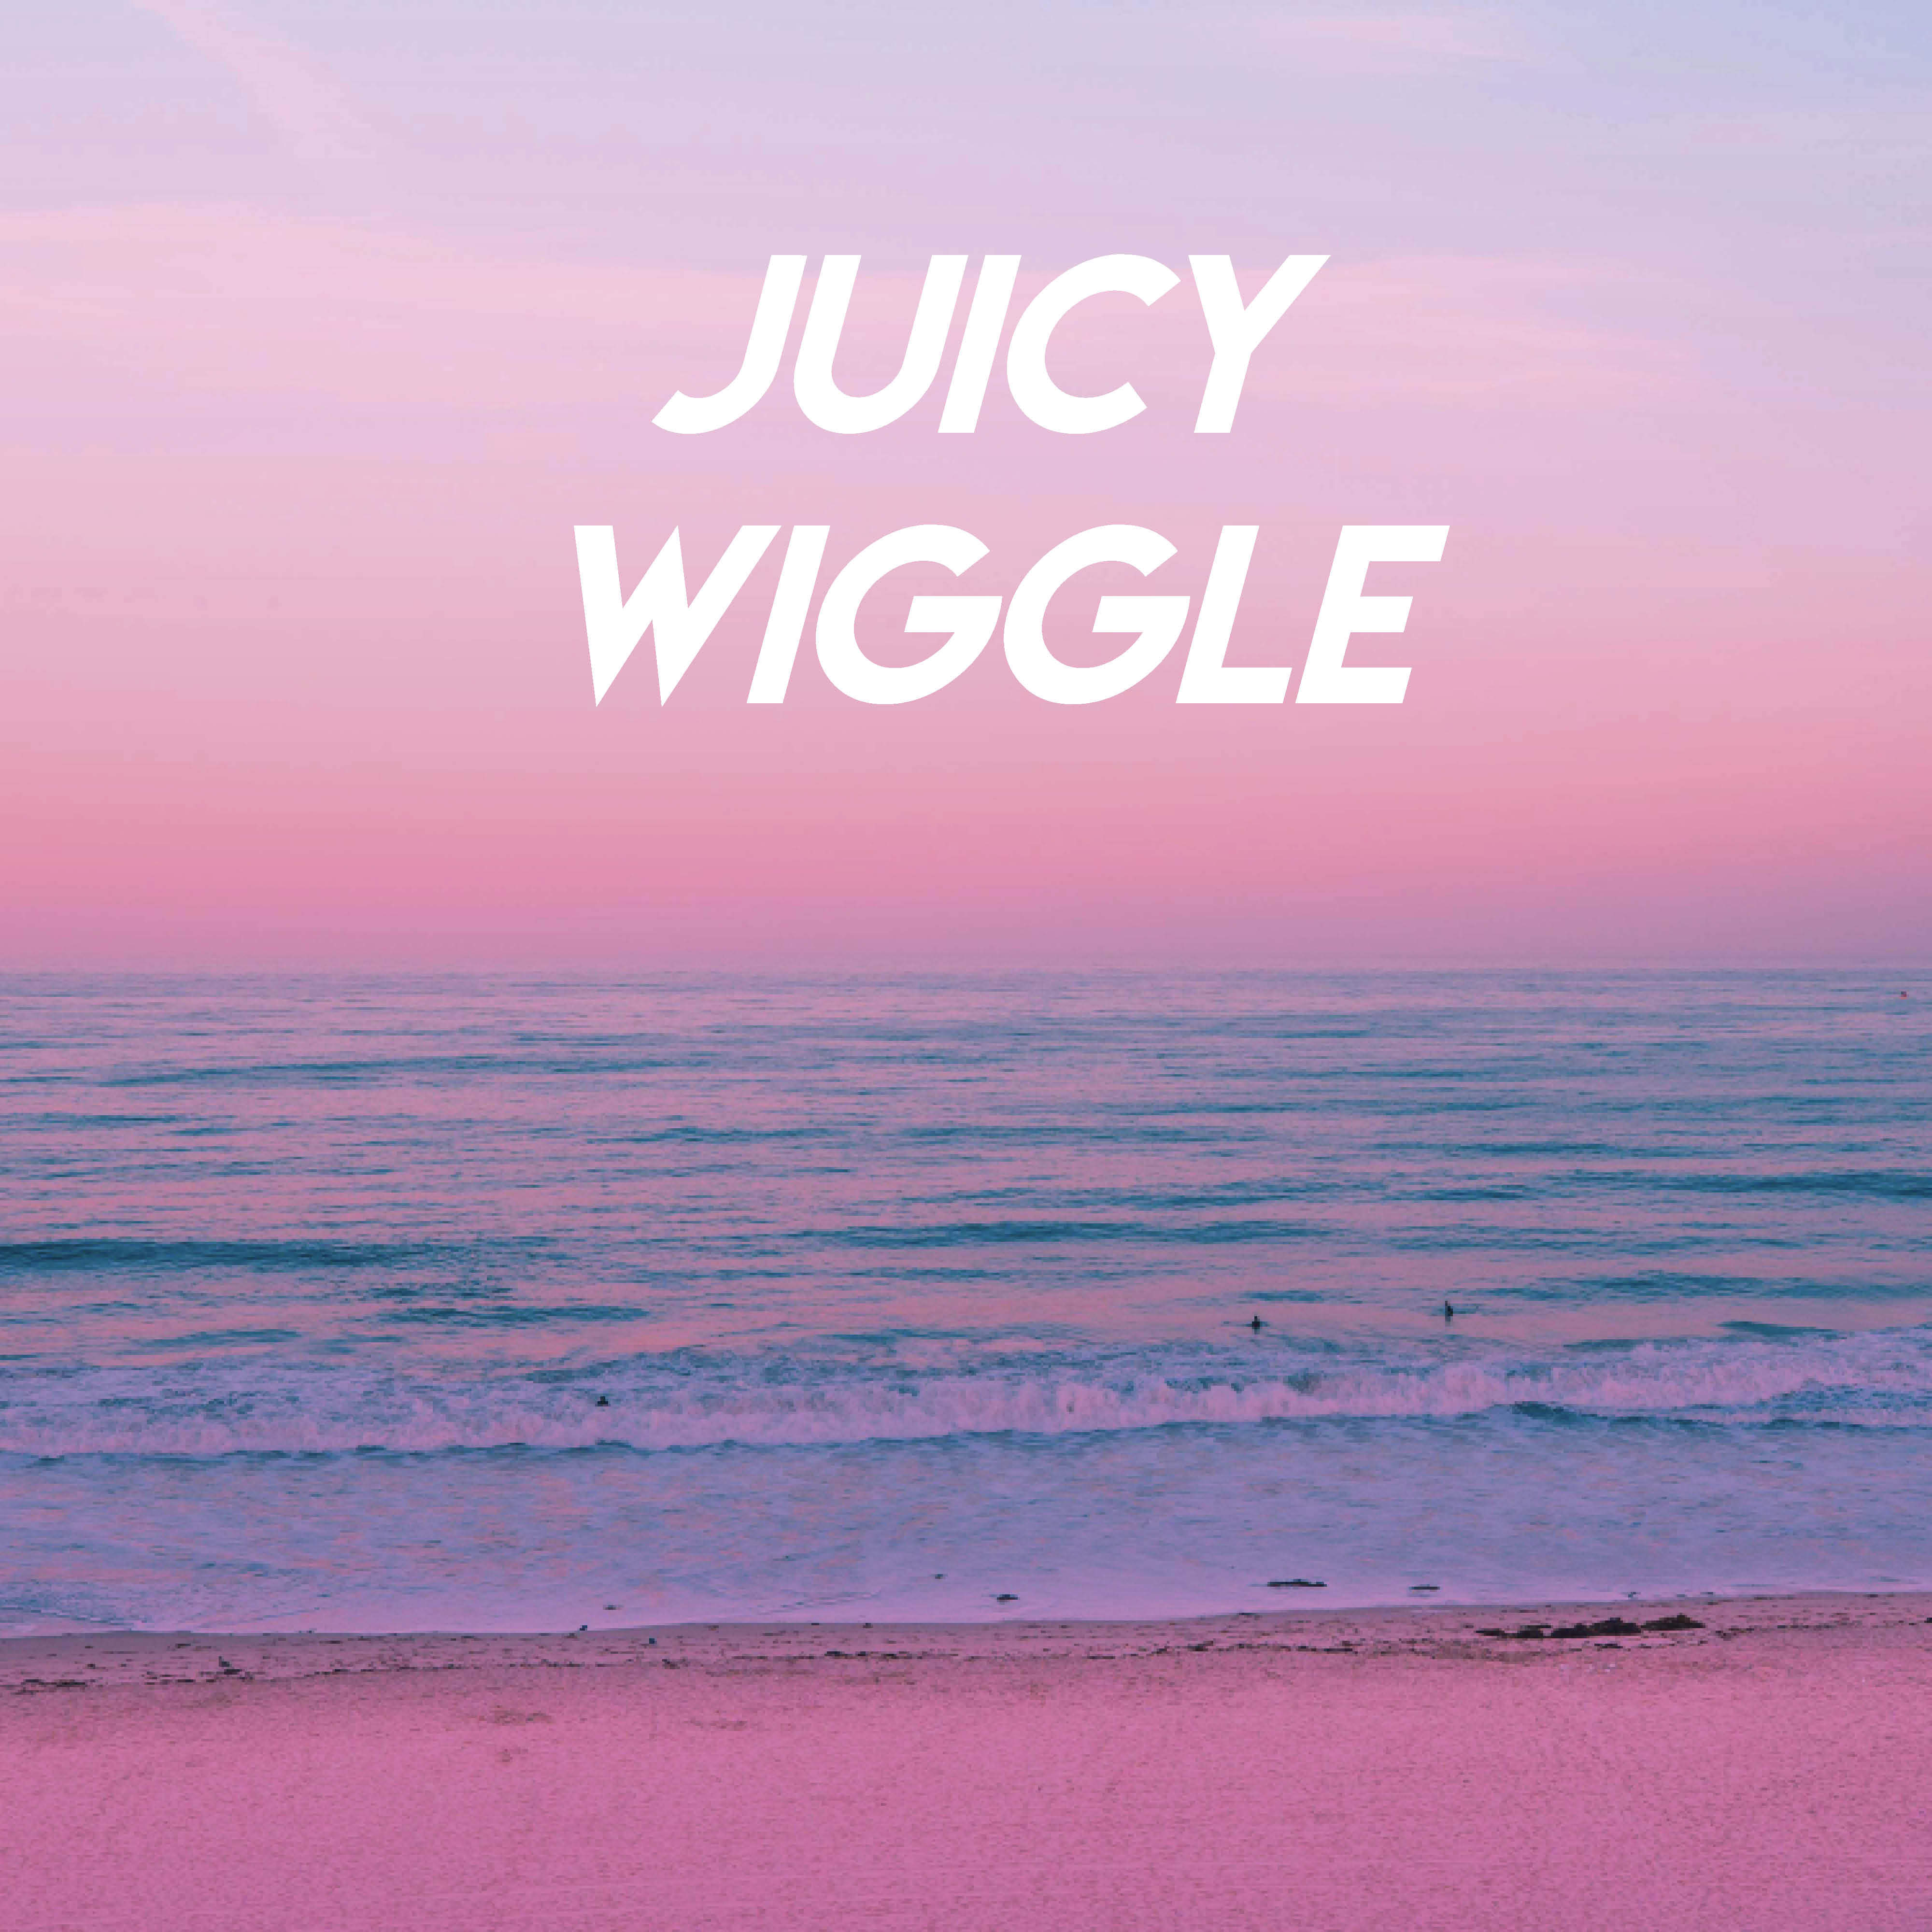 Juicy Wiggle